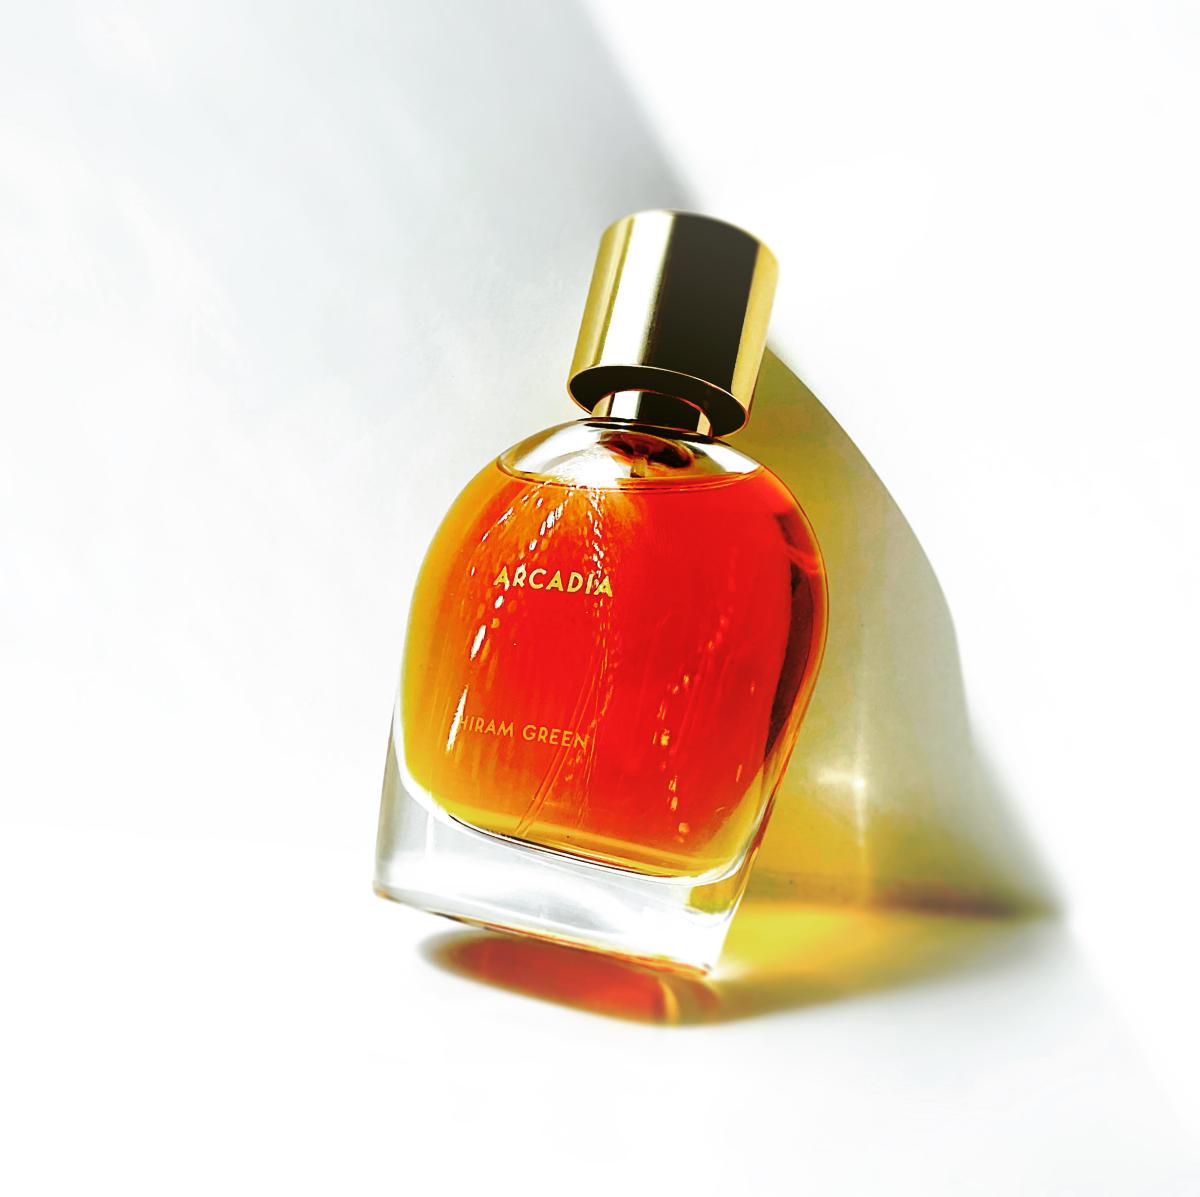 Arcadia Hiram Green perfume - a new fragrance for women and men 2022